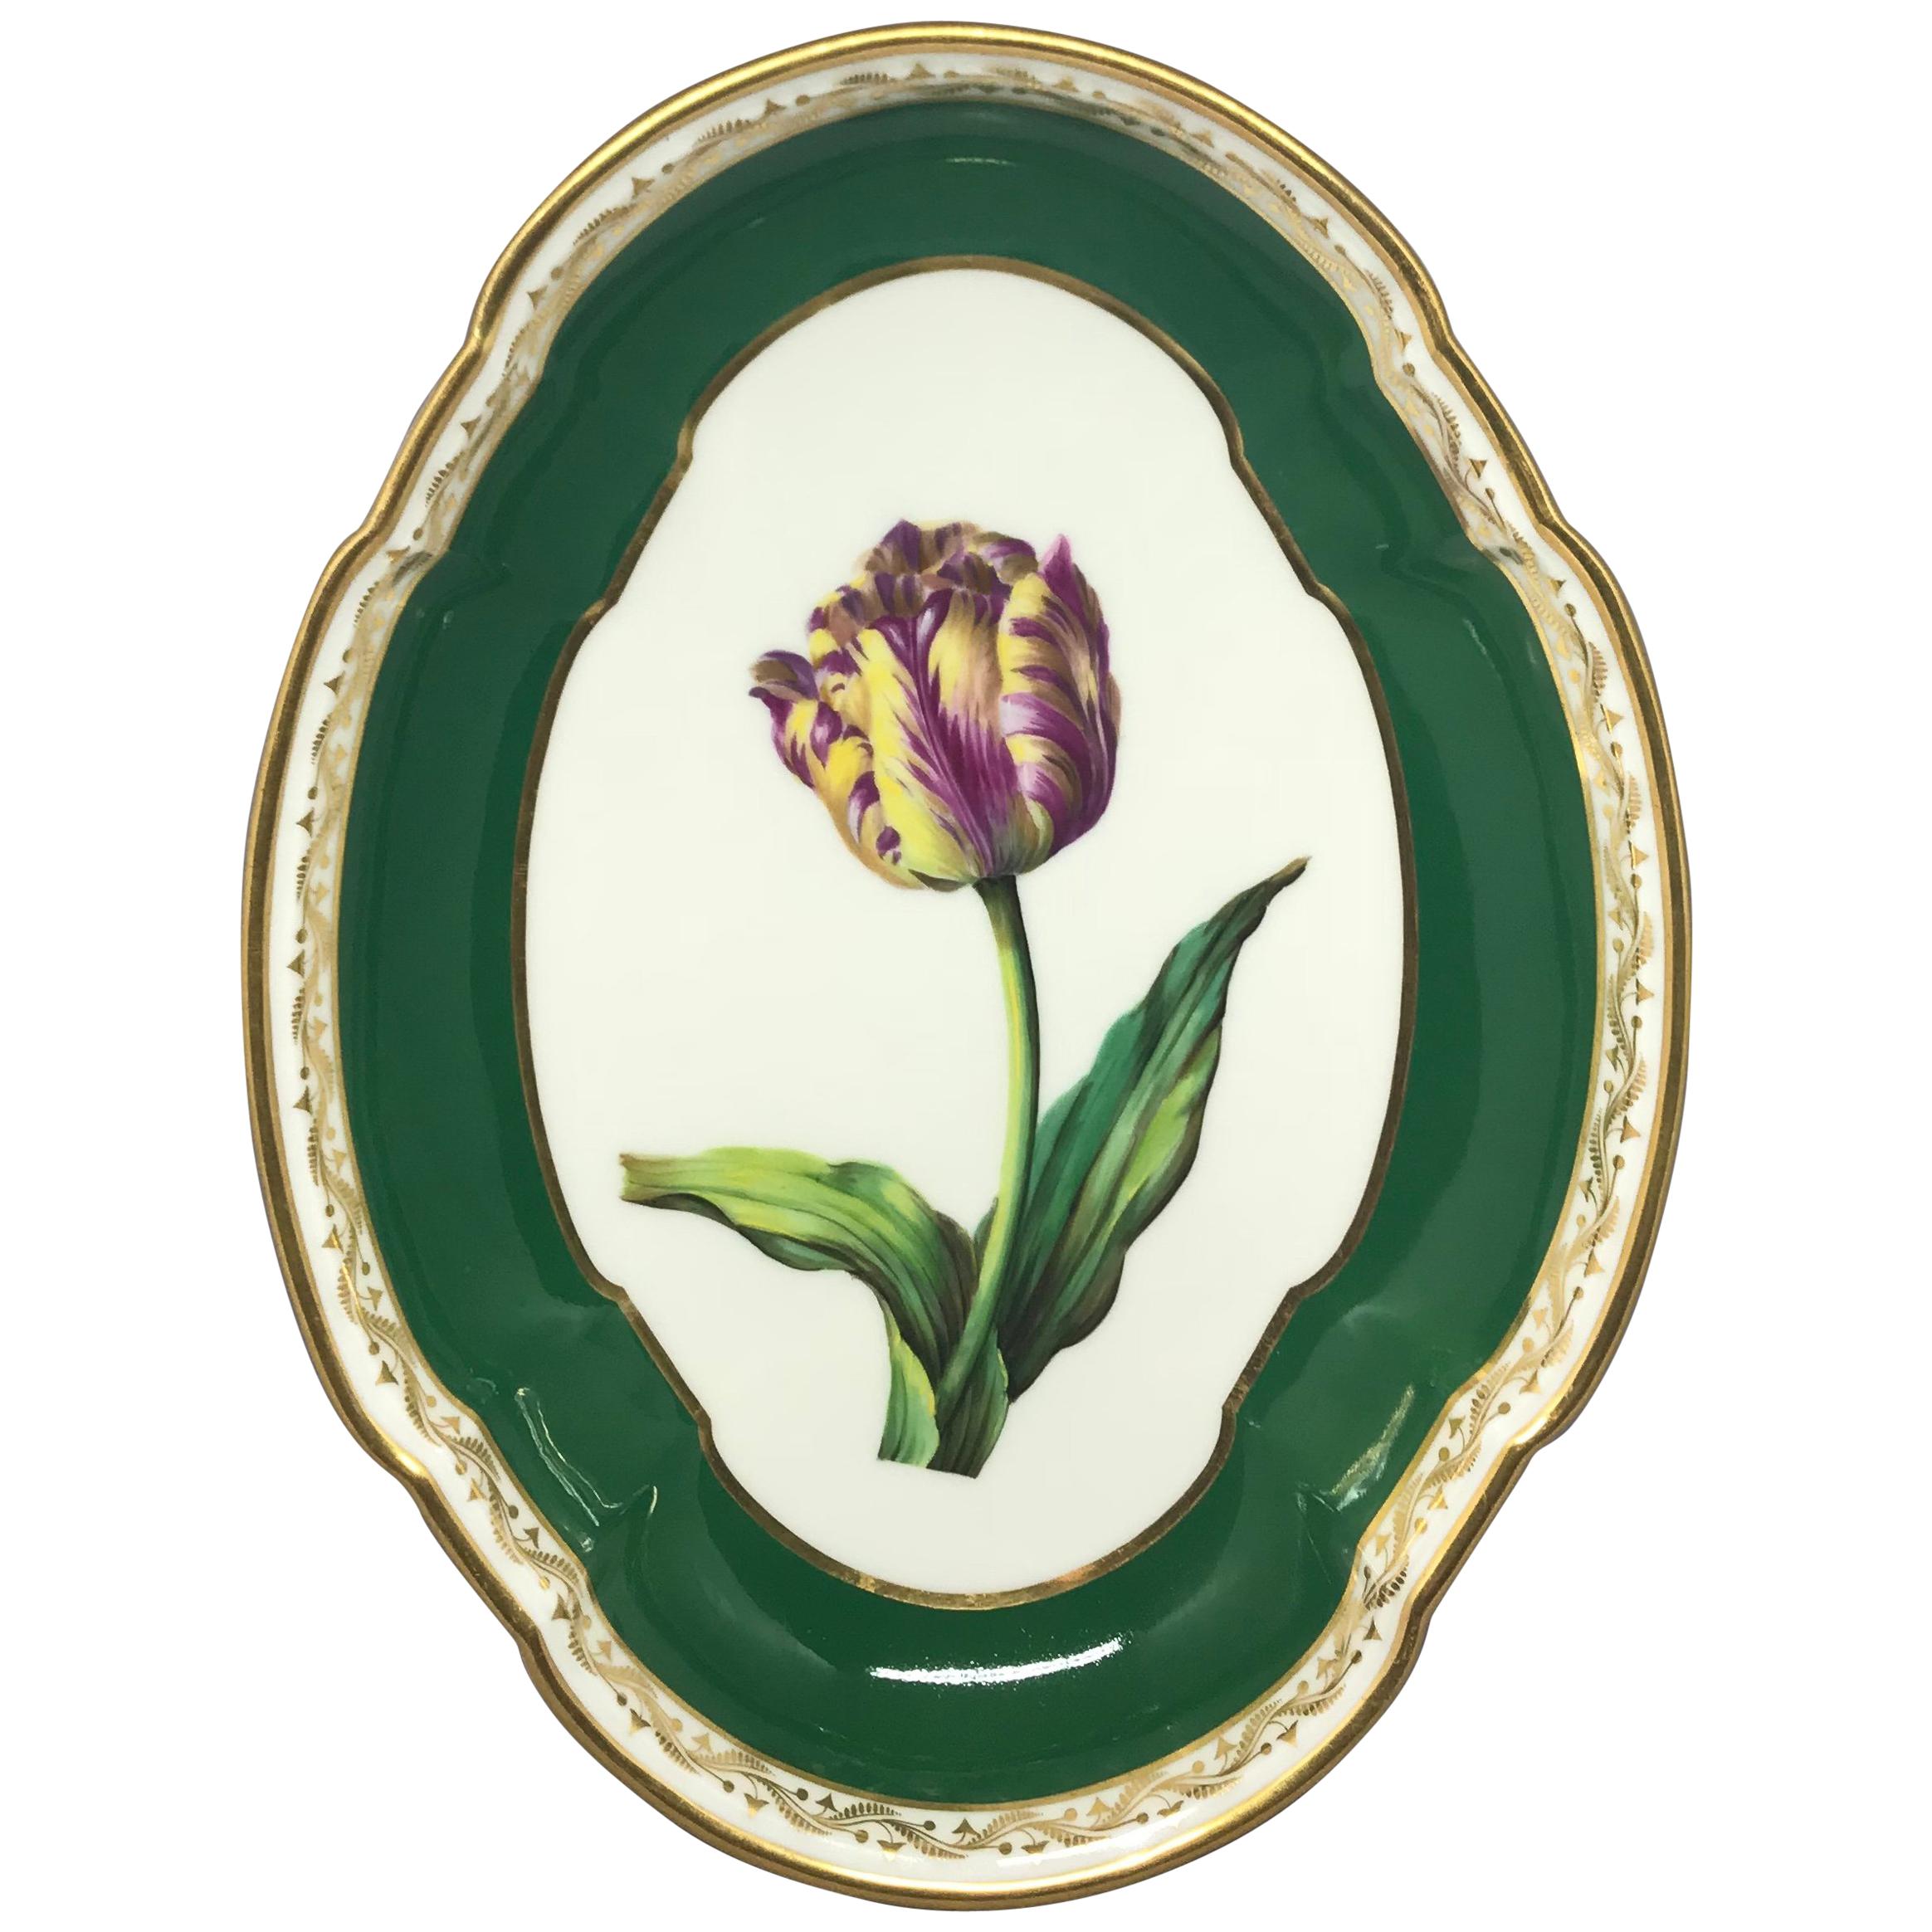 Tulpenschale aus grünem und vergoldetem Porzellan